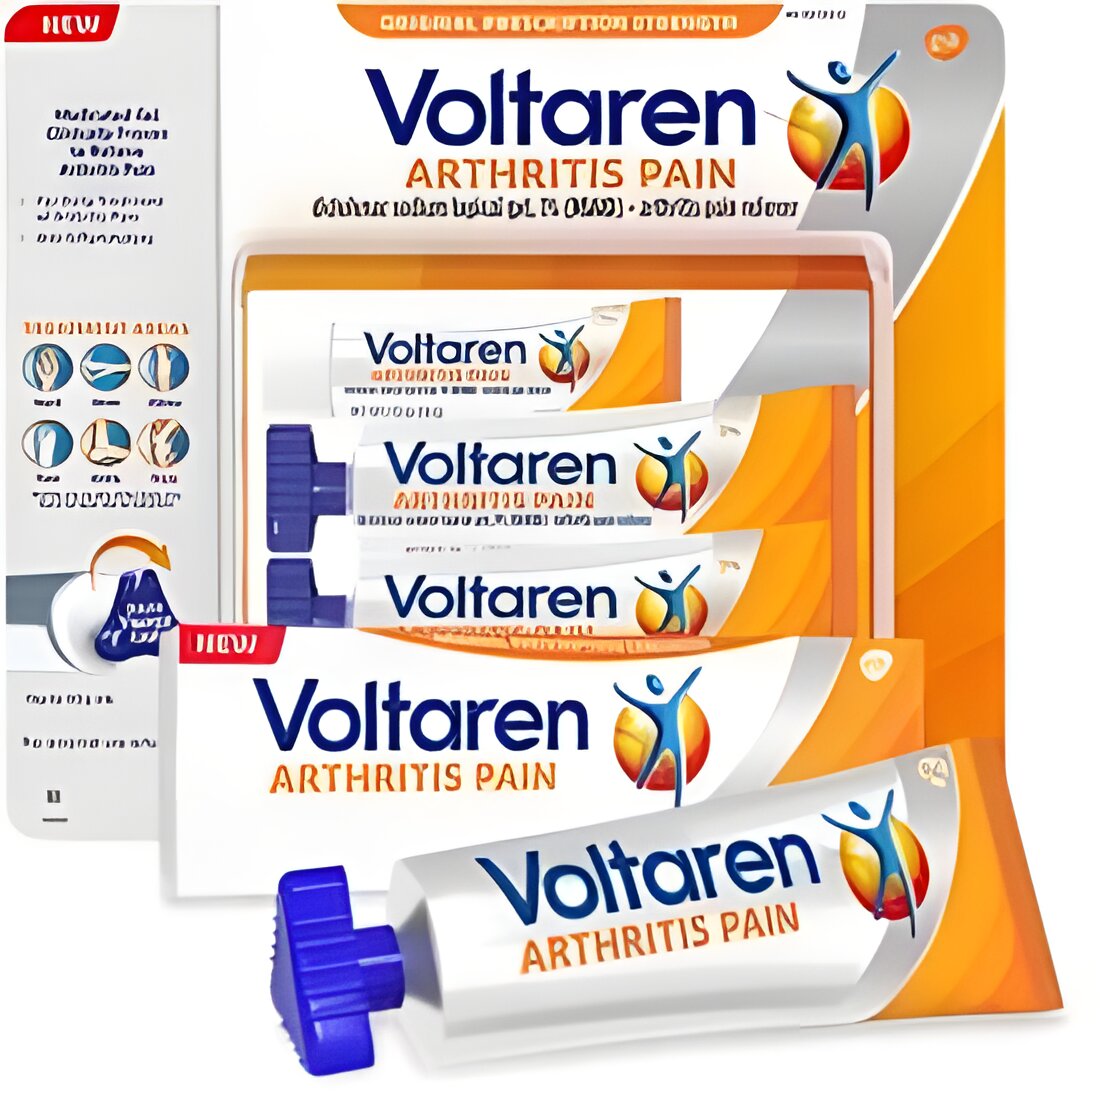 Free Voltaren Arthritis Pain Gel Sample